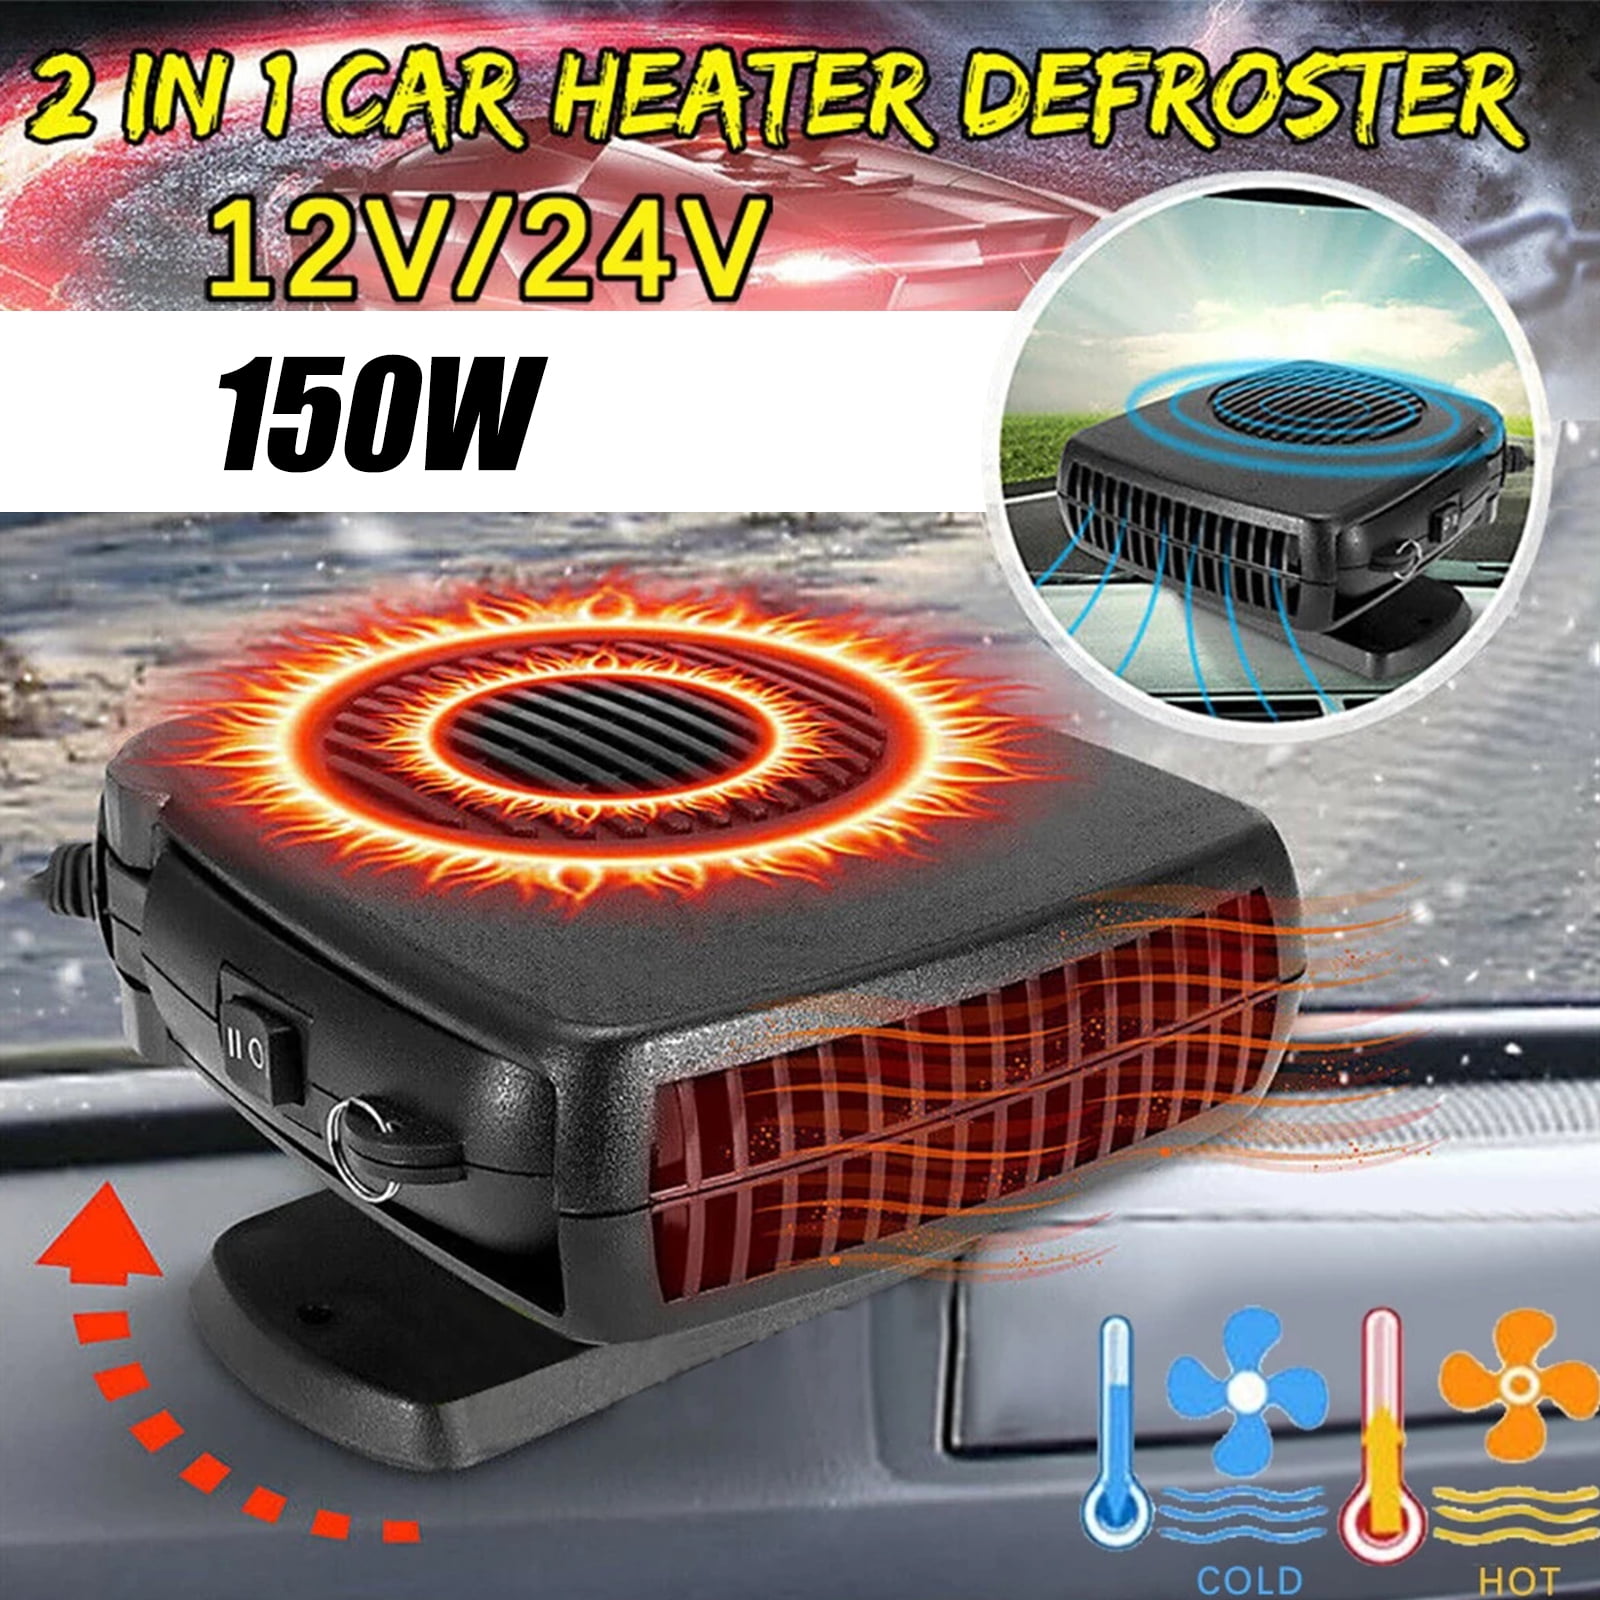 12V Car Heater/Defroster/Fan - IGIA NEW YORK